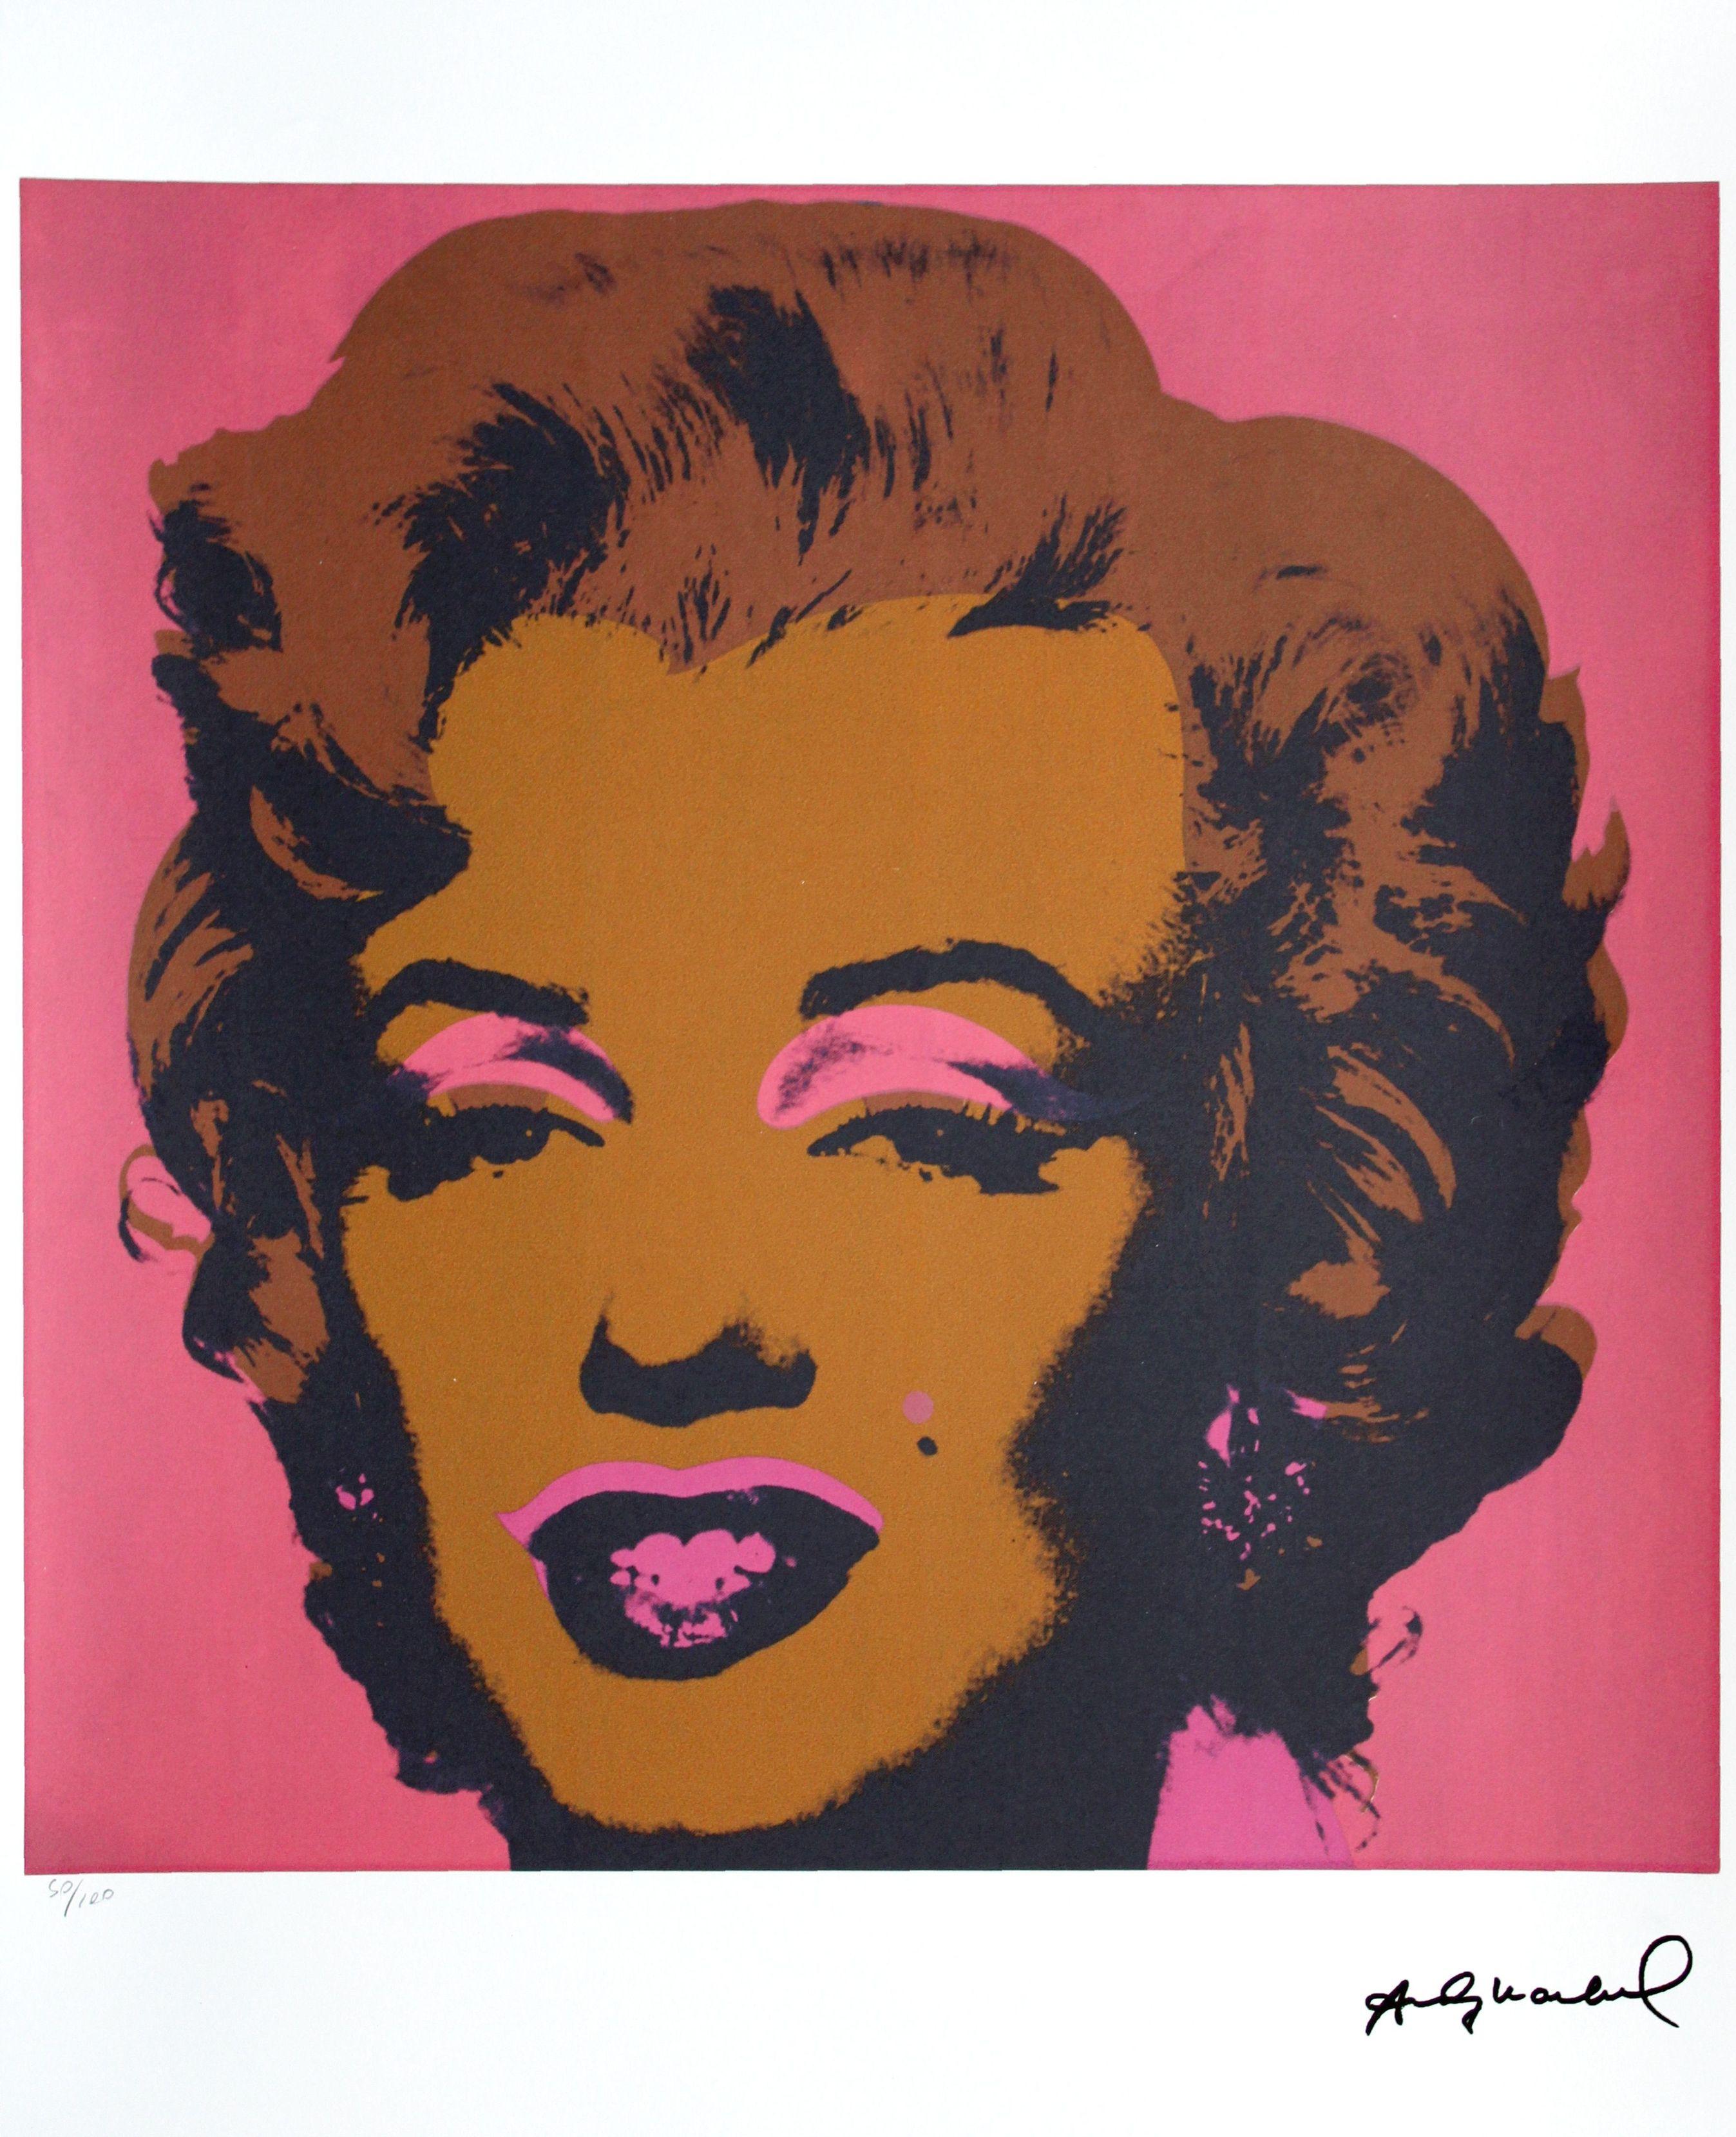 Andy Warhol Print - Marilyn Monroe. 50/120. Lithography, offset printing, imprint size 37x37 cm